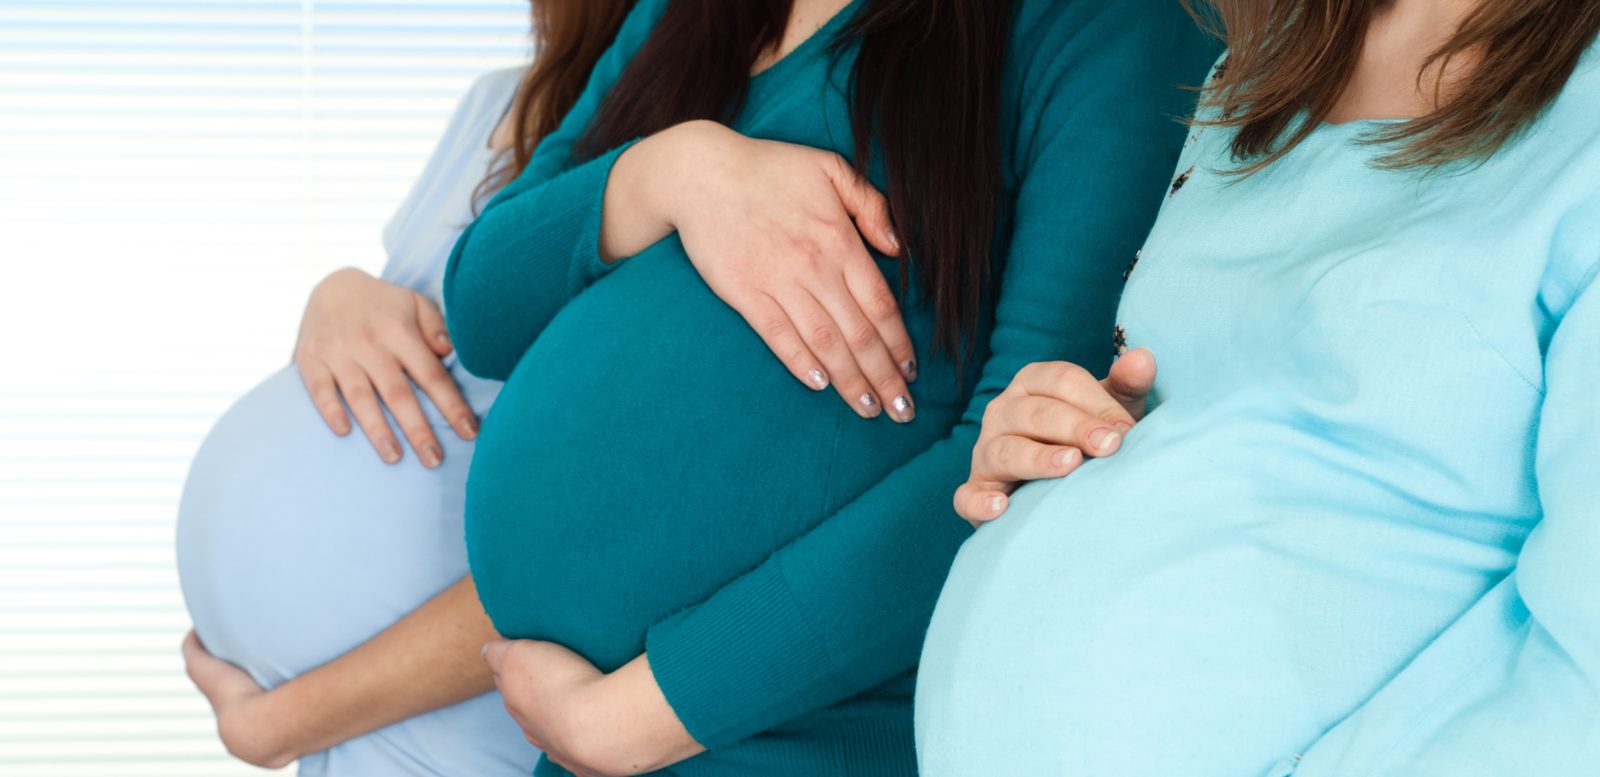 surrogacy law in georgia (img): pregnant lady